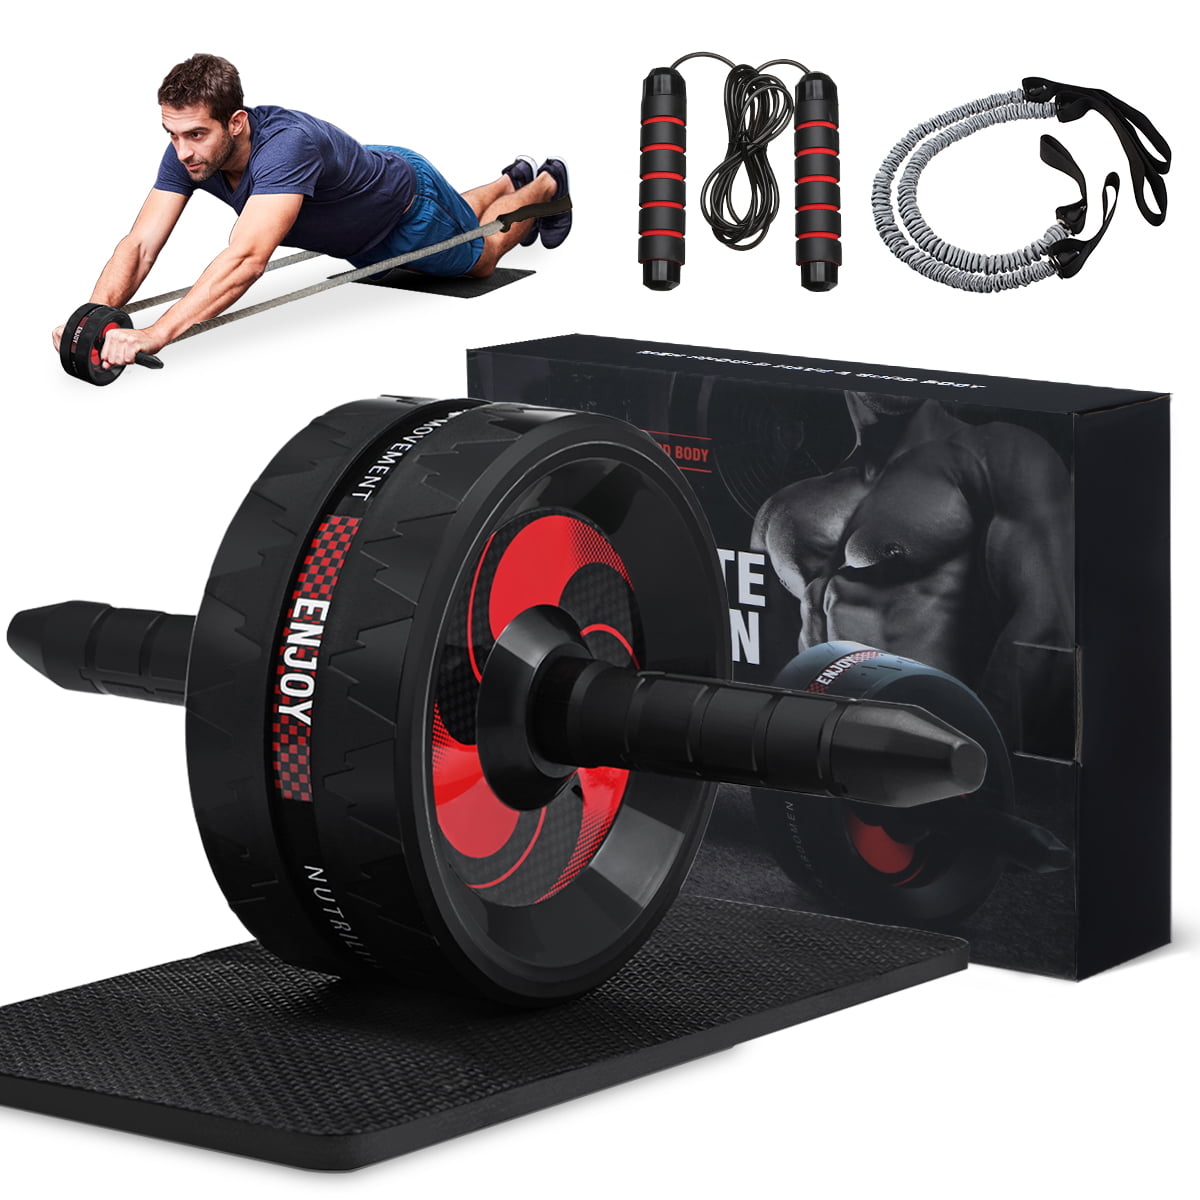 4 Wheels ABs Abdominal Roller Workout Exercise Fitness Equipment Machine Mat 